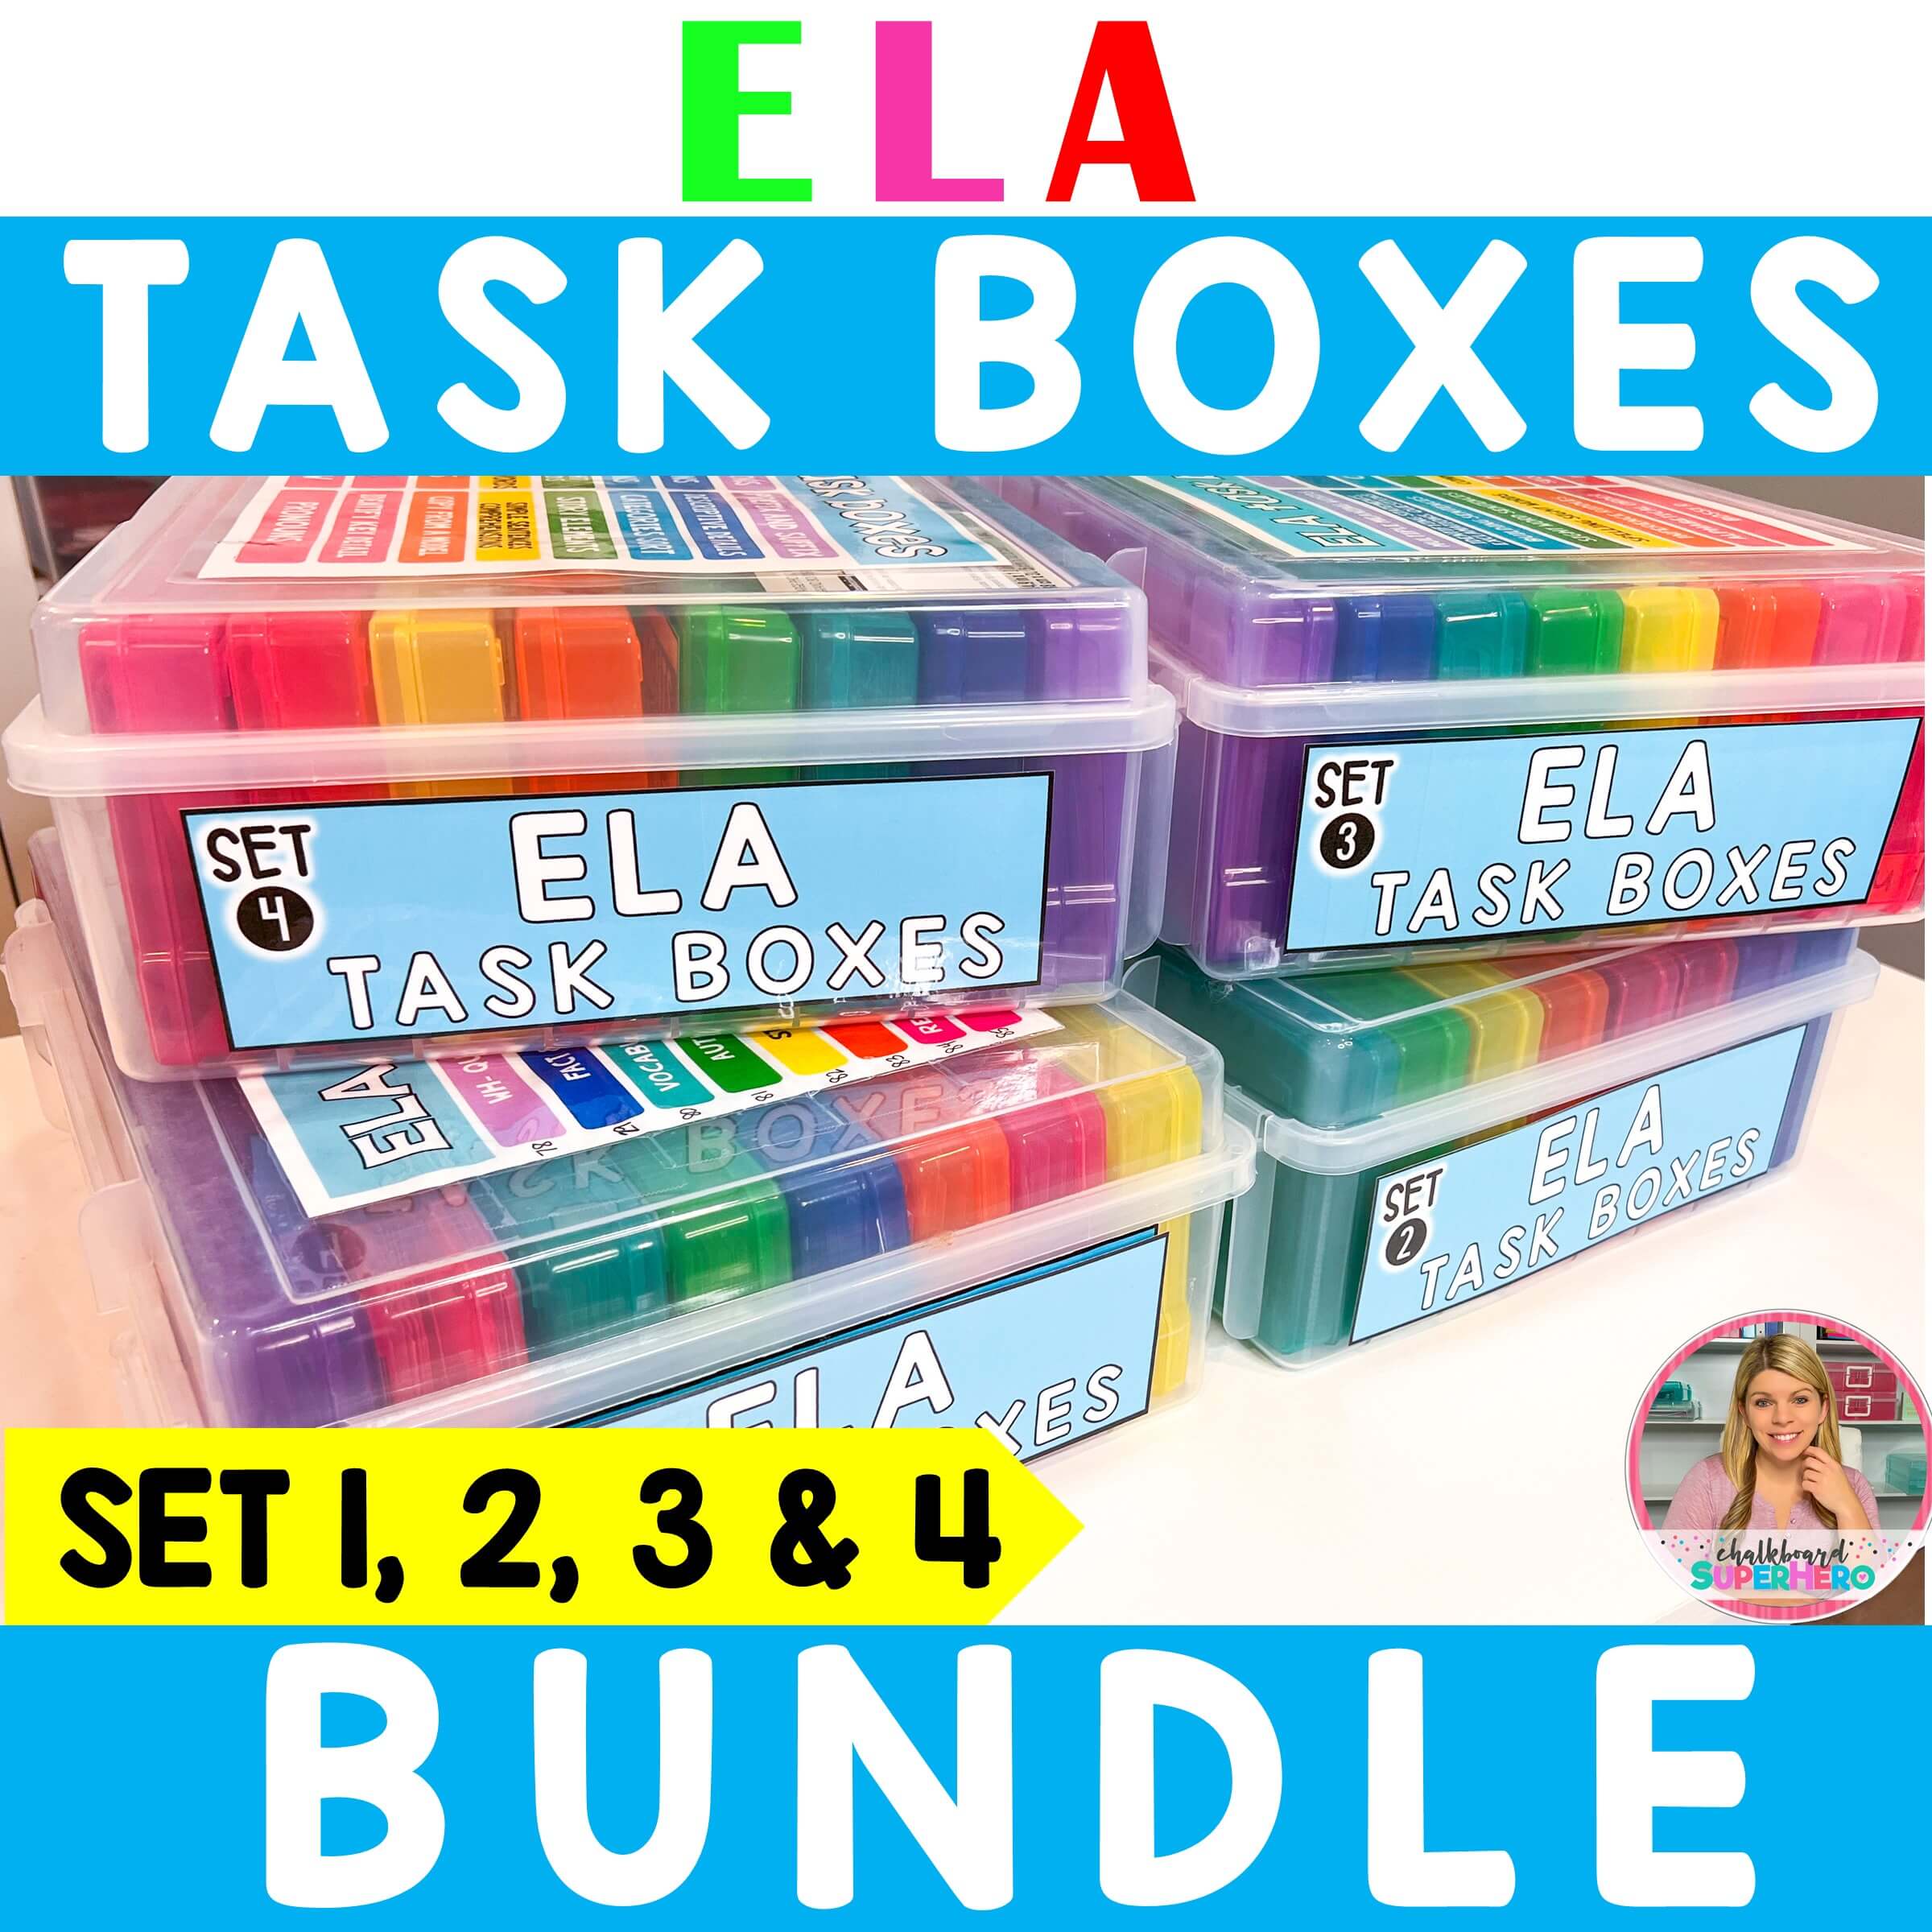 Life Skills Task Boxes - set 1 & 2 - Chalkboard Superhero